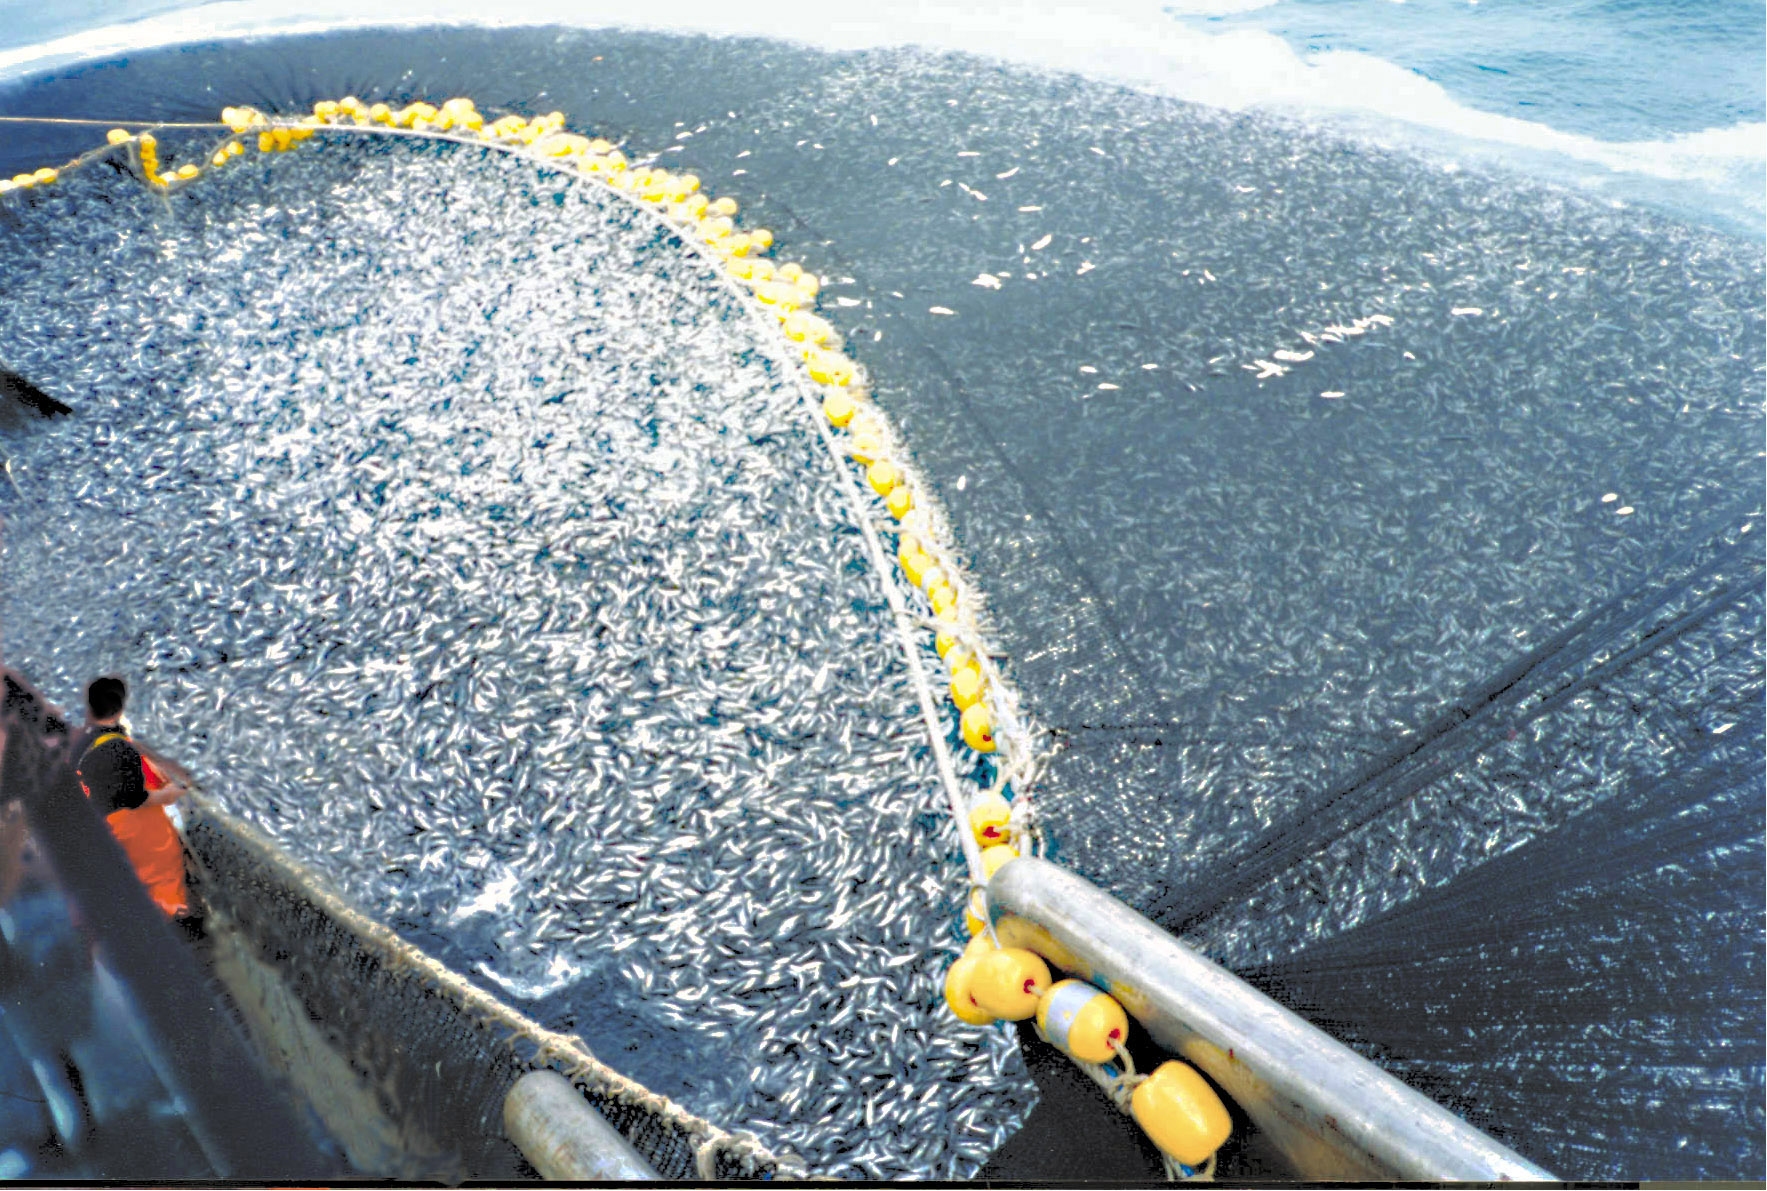 Overfishing in fish farming